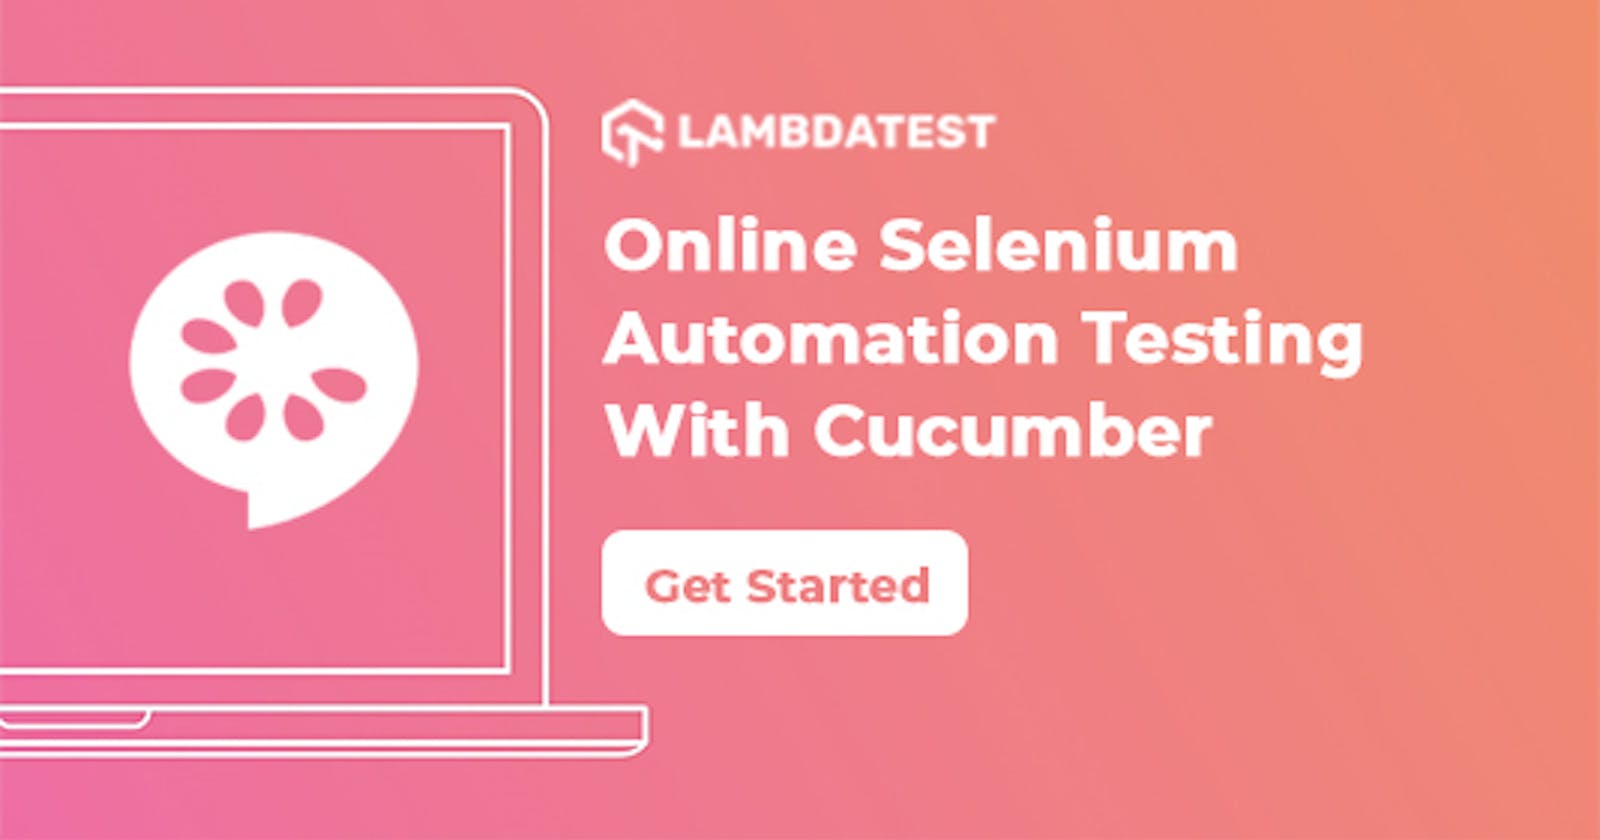 Cucumber Selenium: Comprehensive Guide